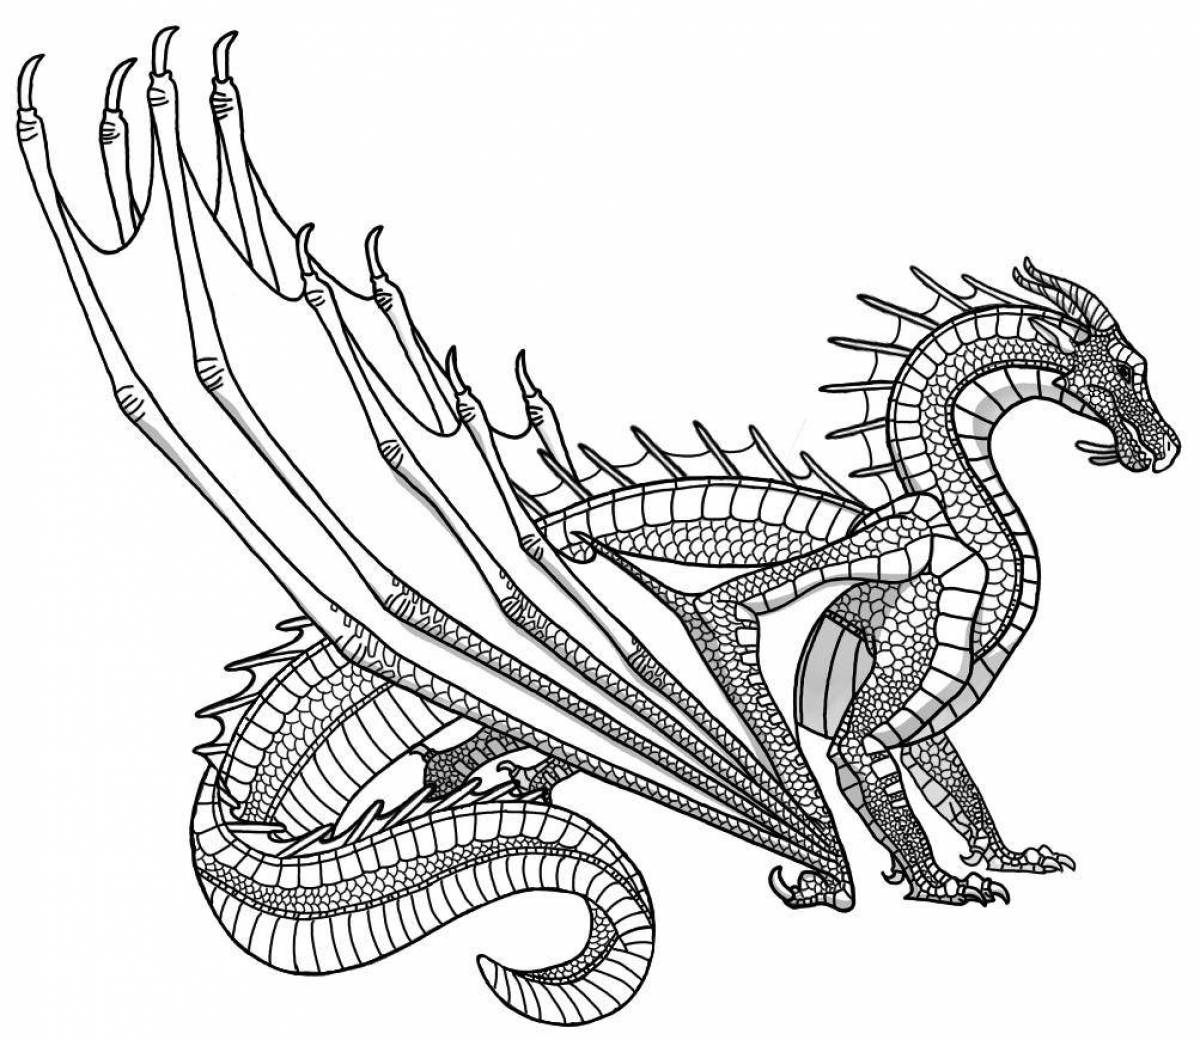 Coloring mystical three-headed dragon